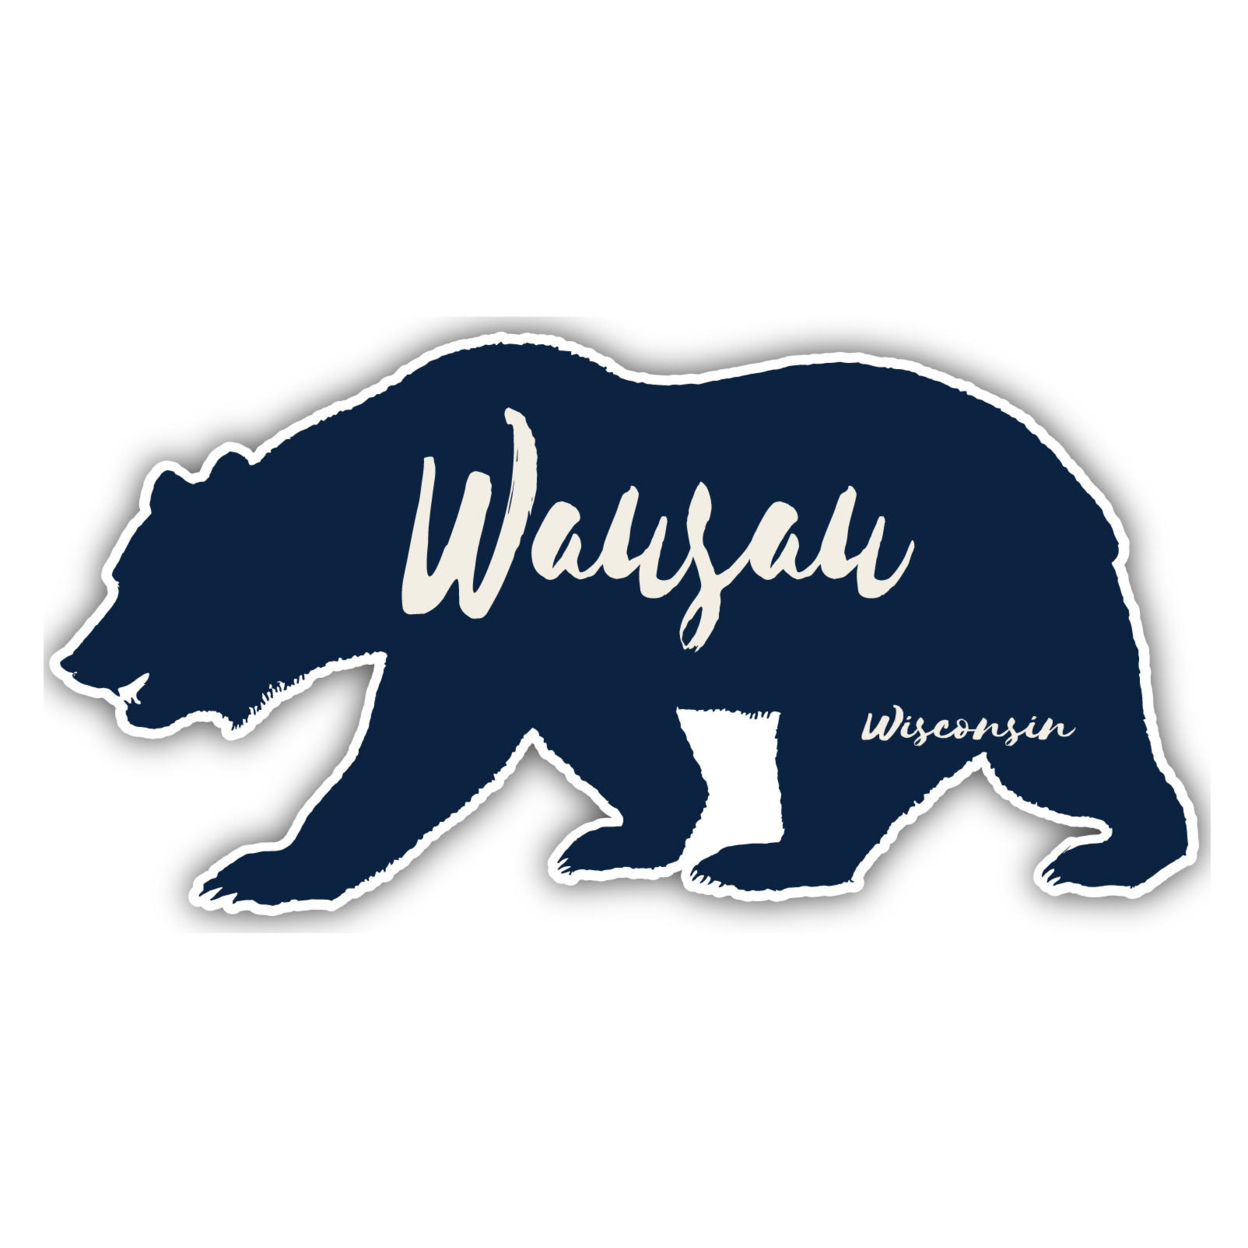 Wausau Wisconsin Souvenir Decorative Stickers (Choose Theme And Size) - Single Unit, 2-Inch, Bear